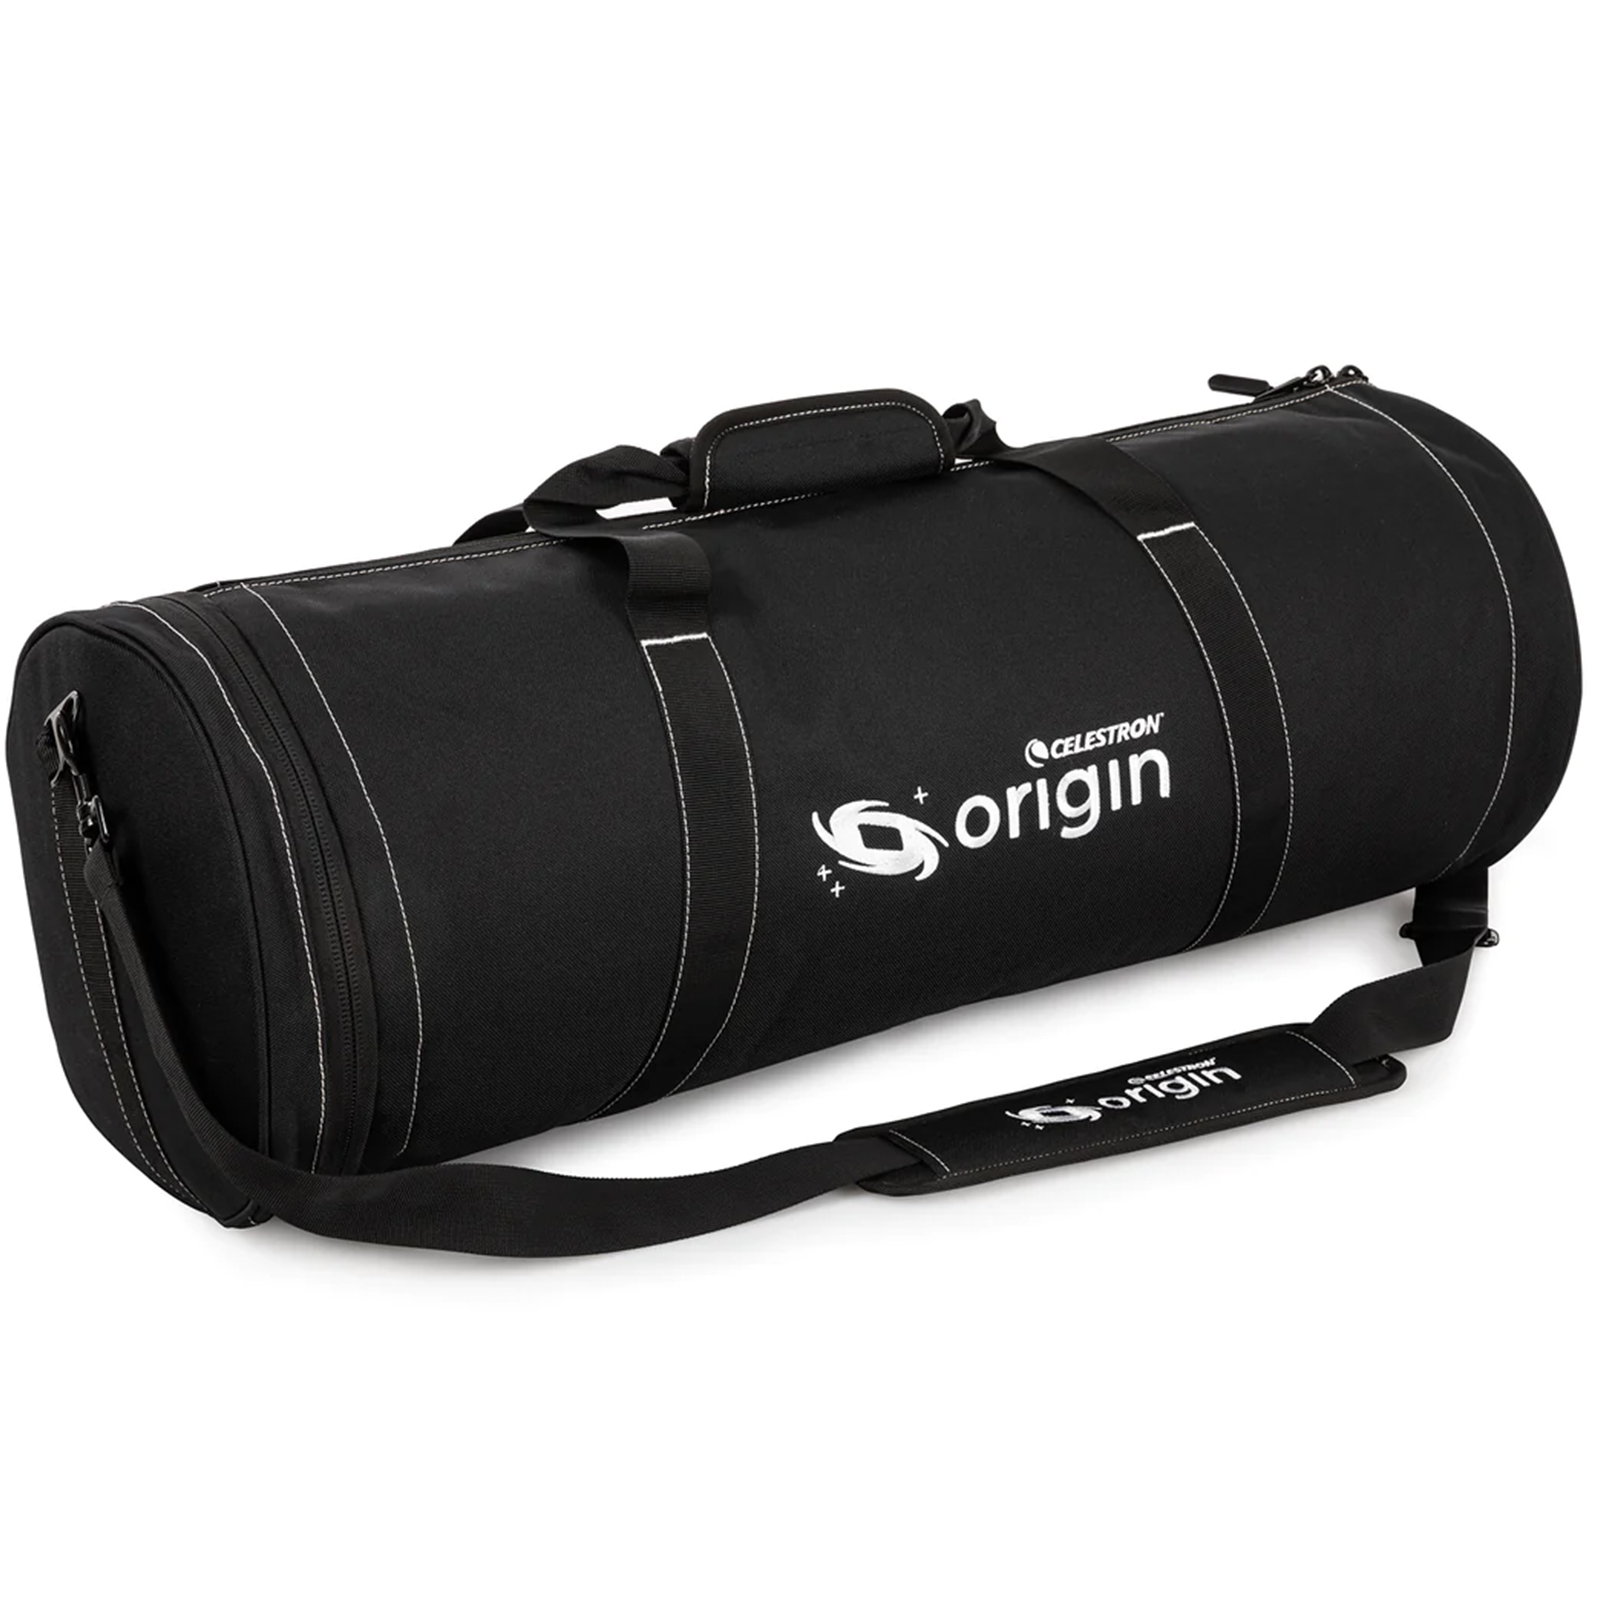 Celestron Padded Carrying Bag for ORIGIN Intelligent Home Observatory